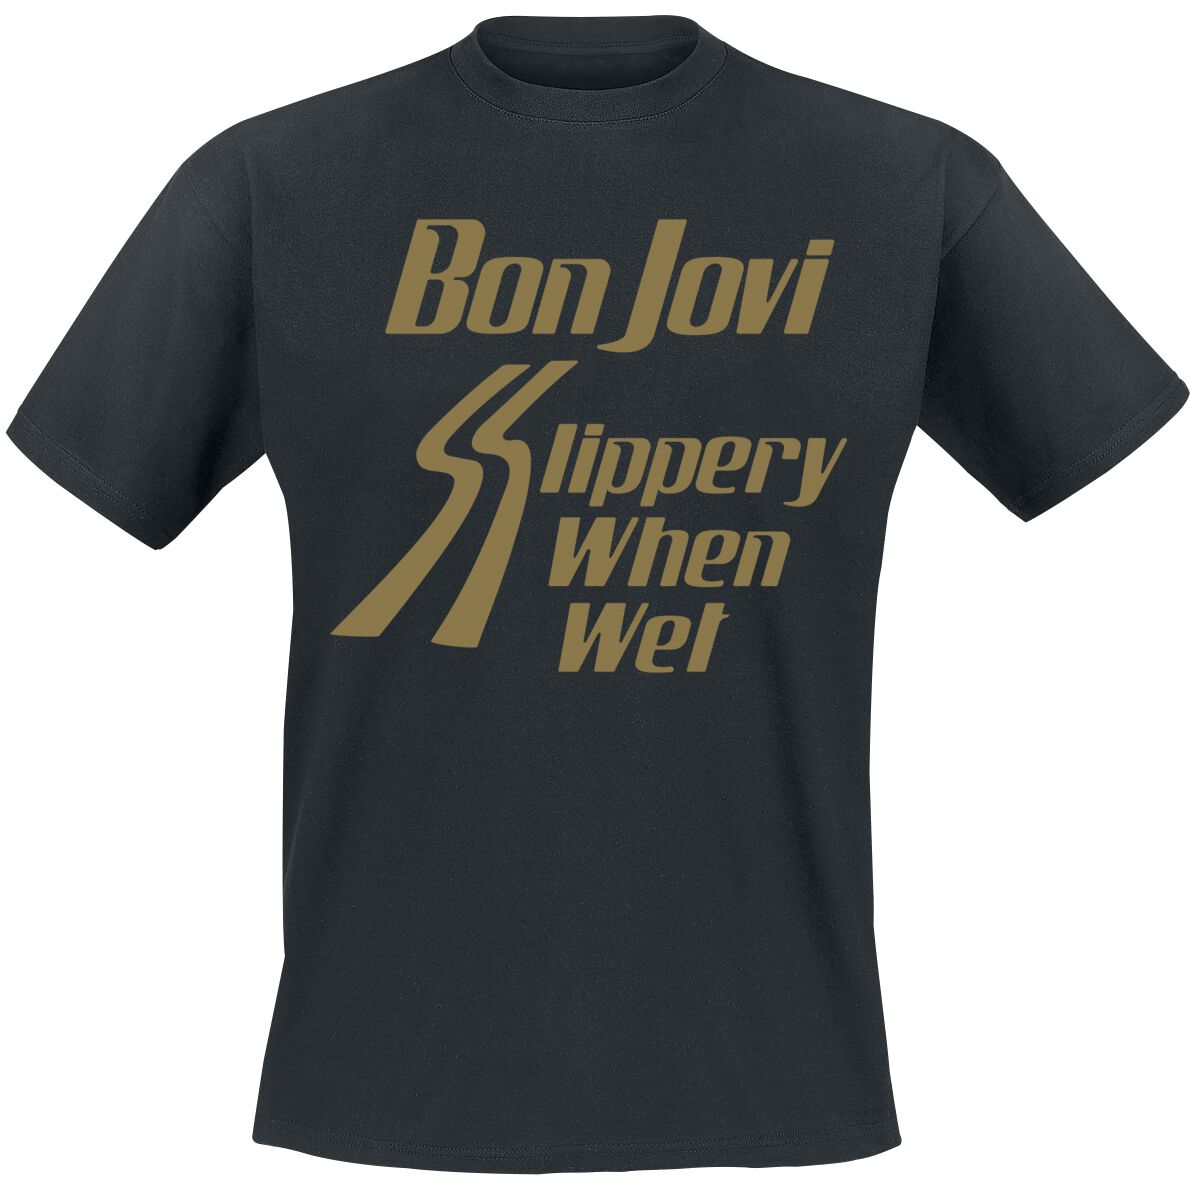 bon jovi t-shirt - slippery when wet - s bis 3xl - fÃ¼r mÃ¤nner - grÃ¶ÃŸe l - - lizenziertes merchandise! schwarz